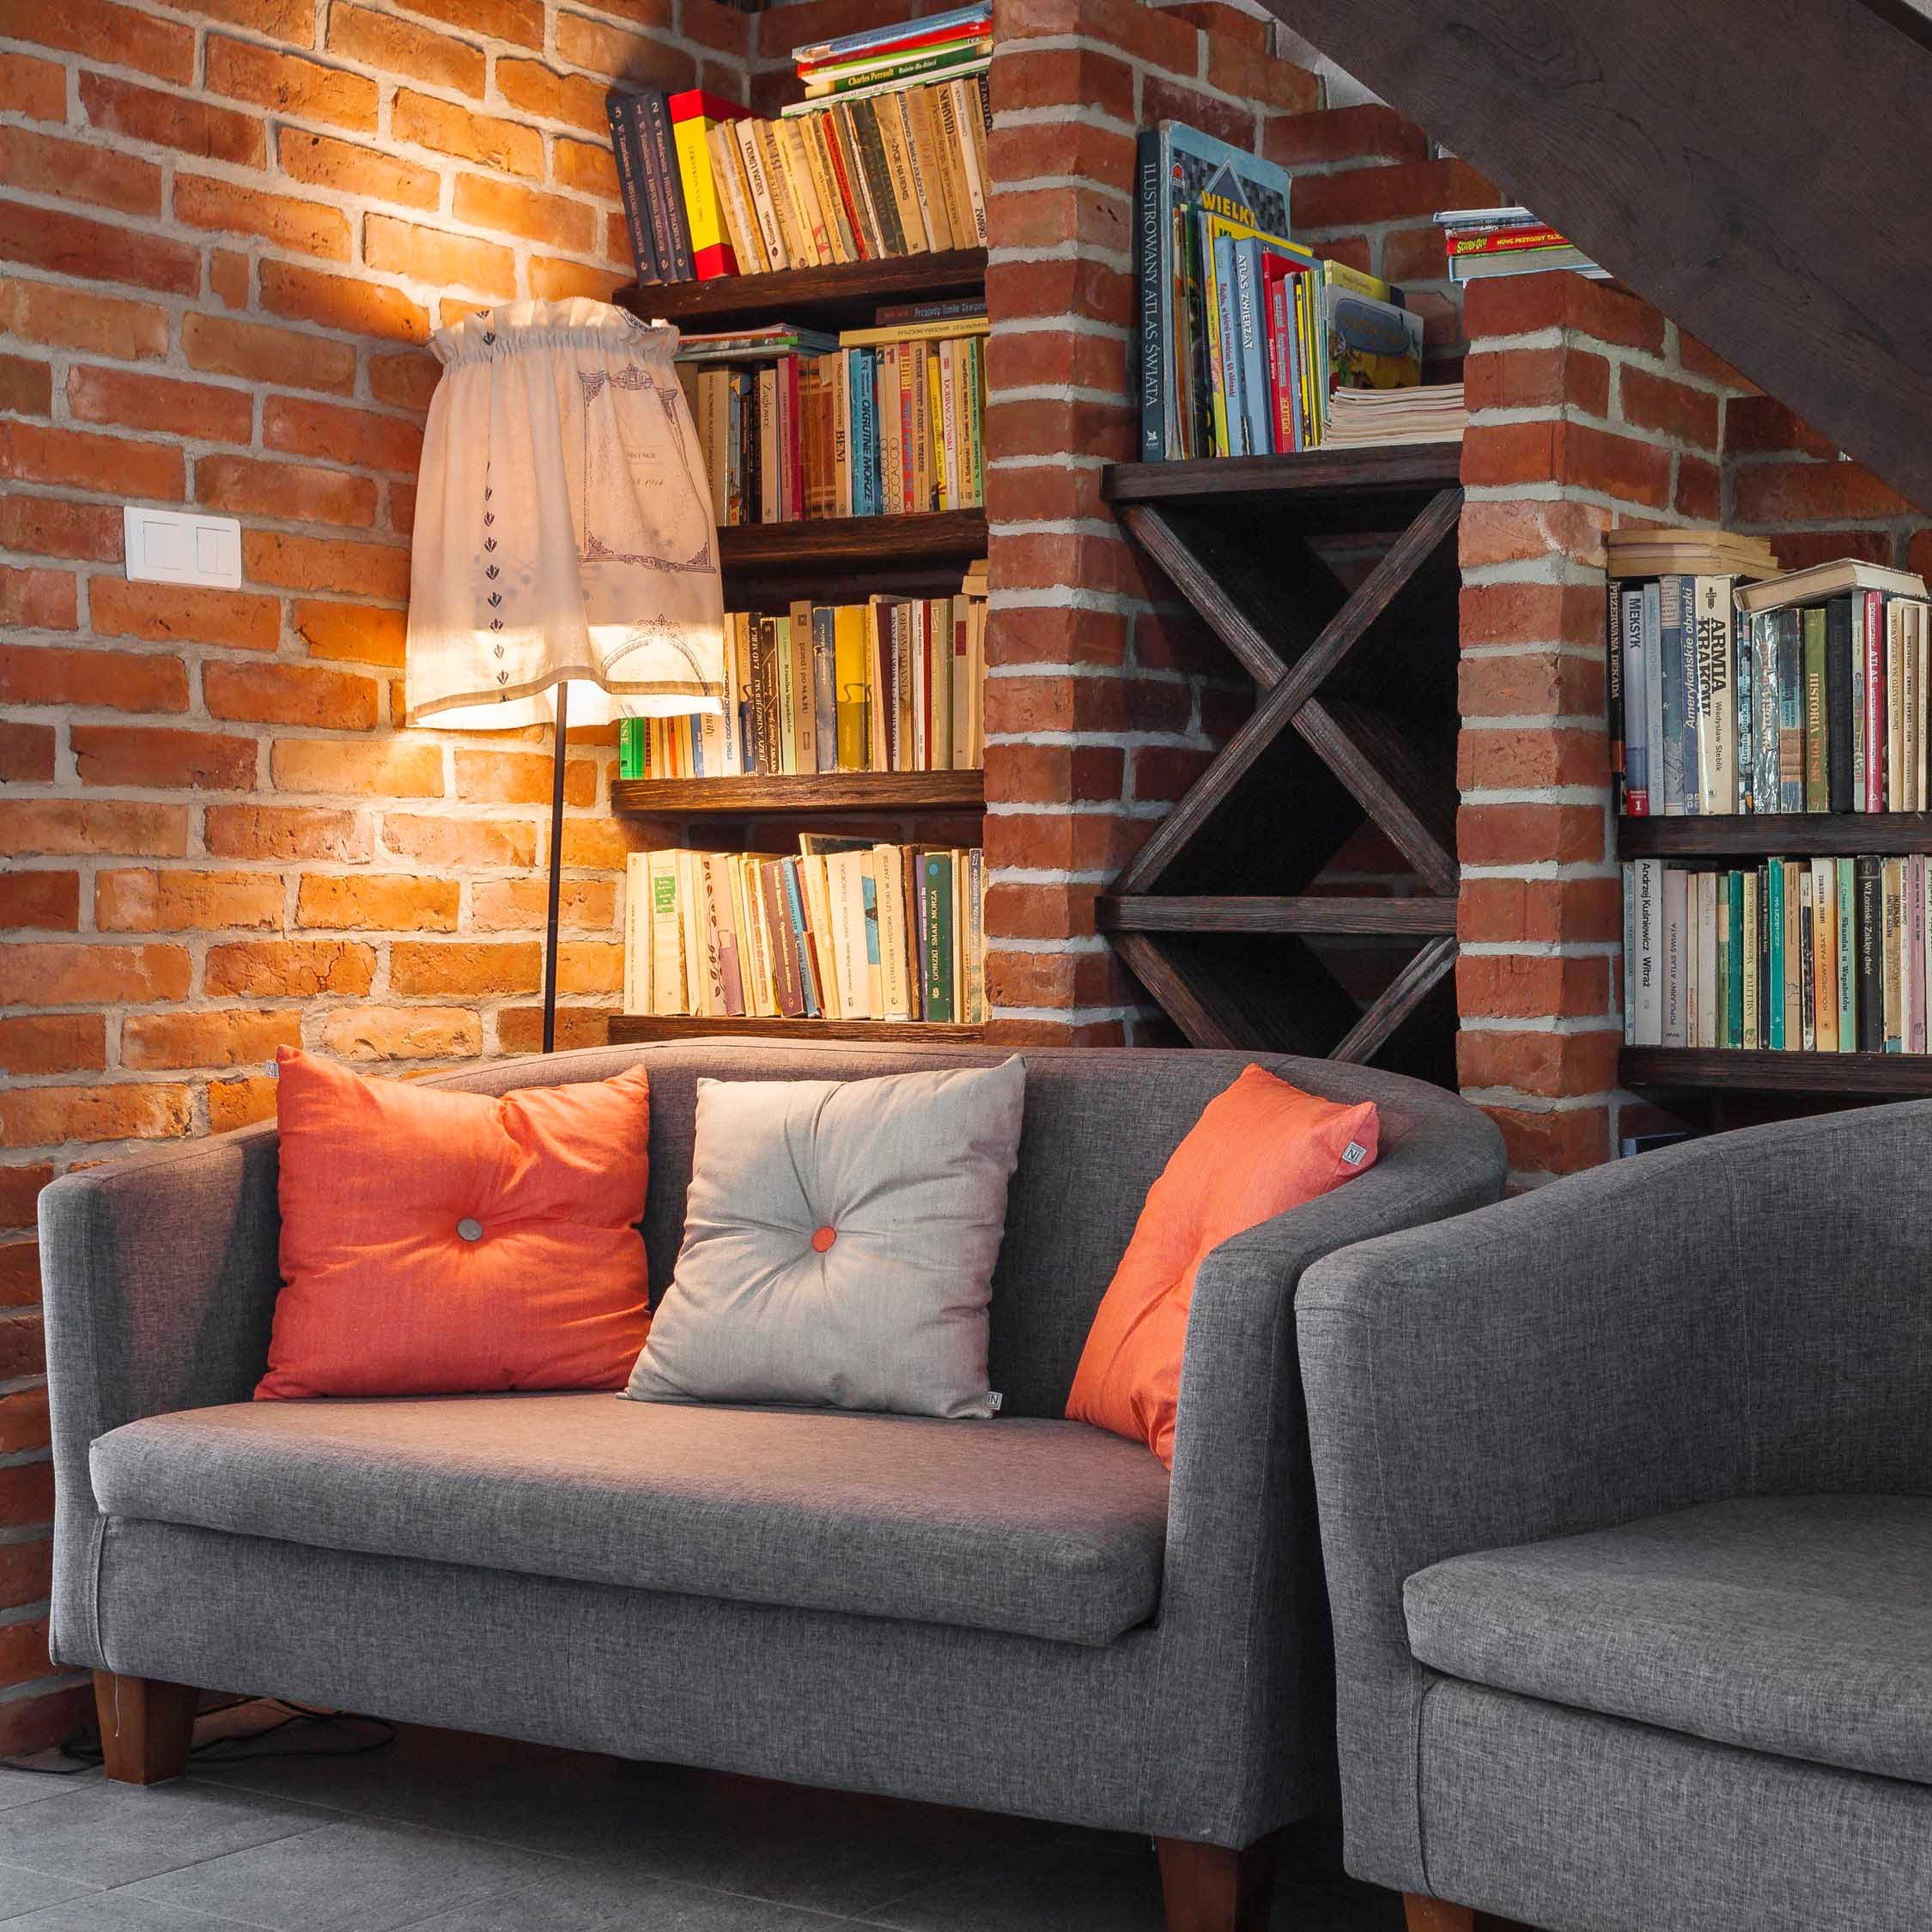 Furniture,Living room,Couch,Shelf,Room,Shelving,Wall,Orange,Bookcase,Interior design